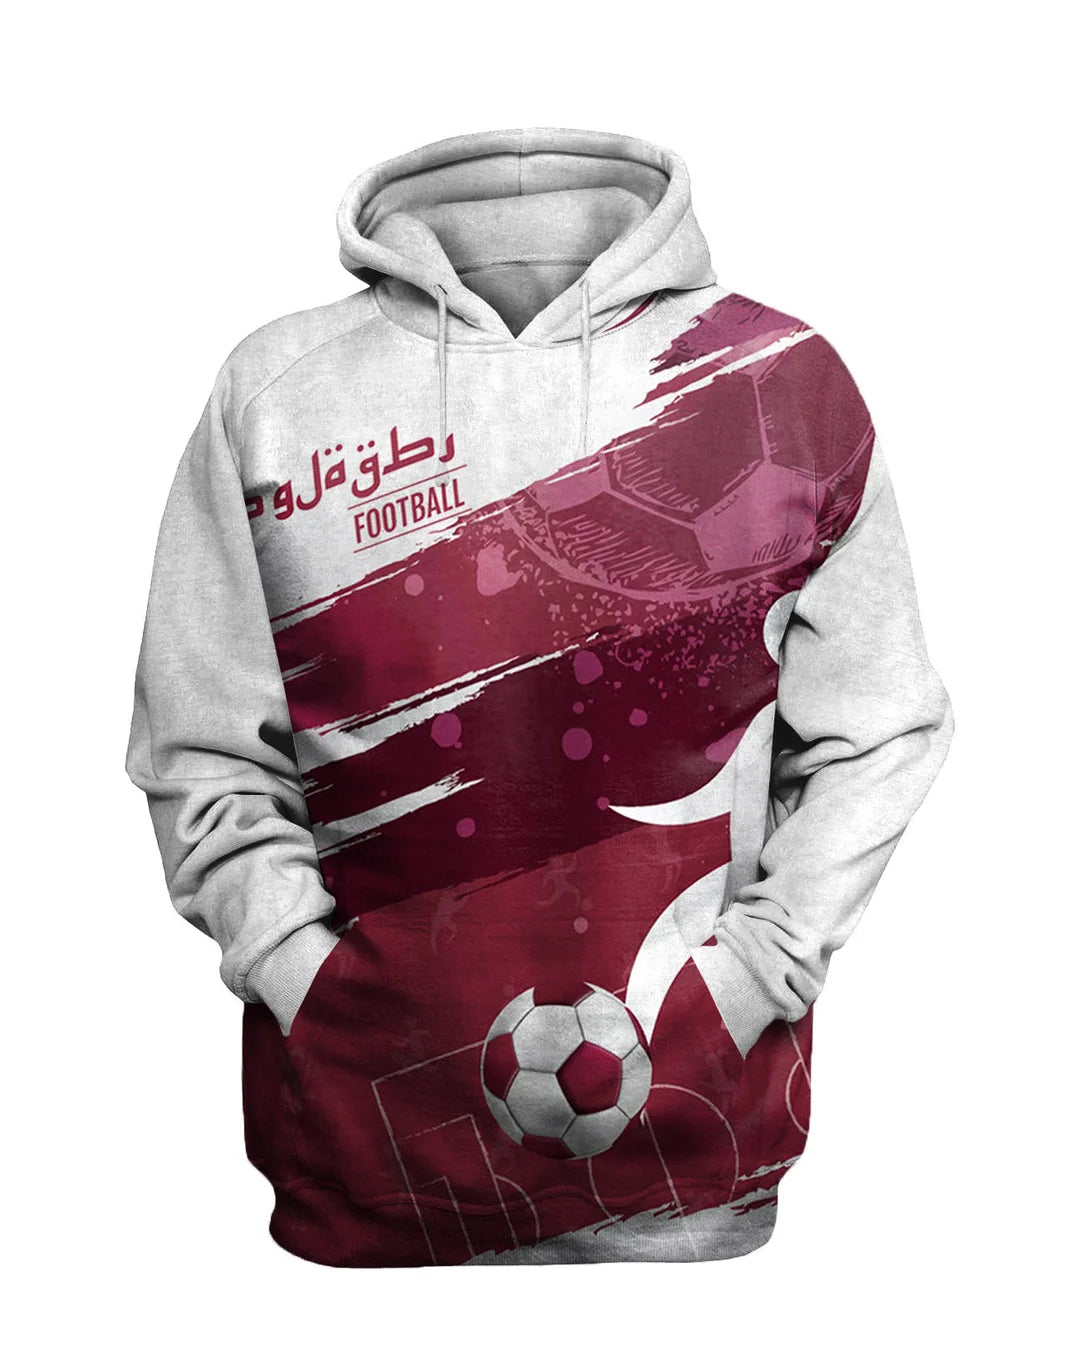 Football 2022 Printed Sweatshirt Set - DUVAL